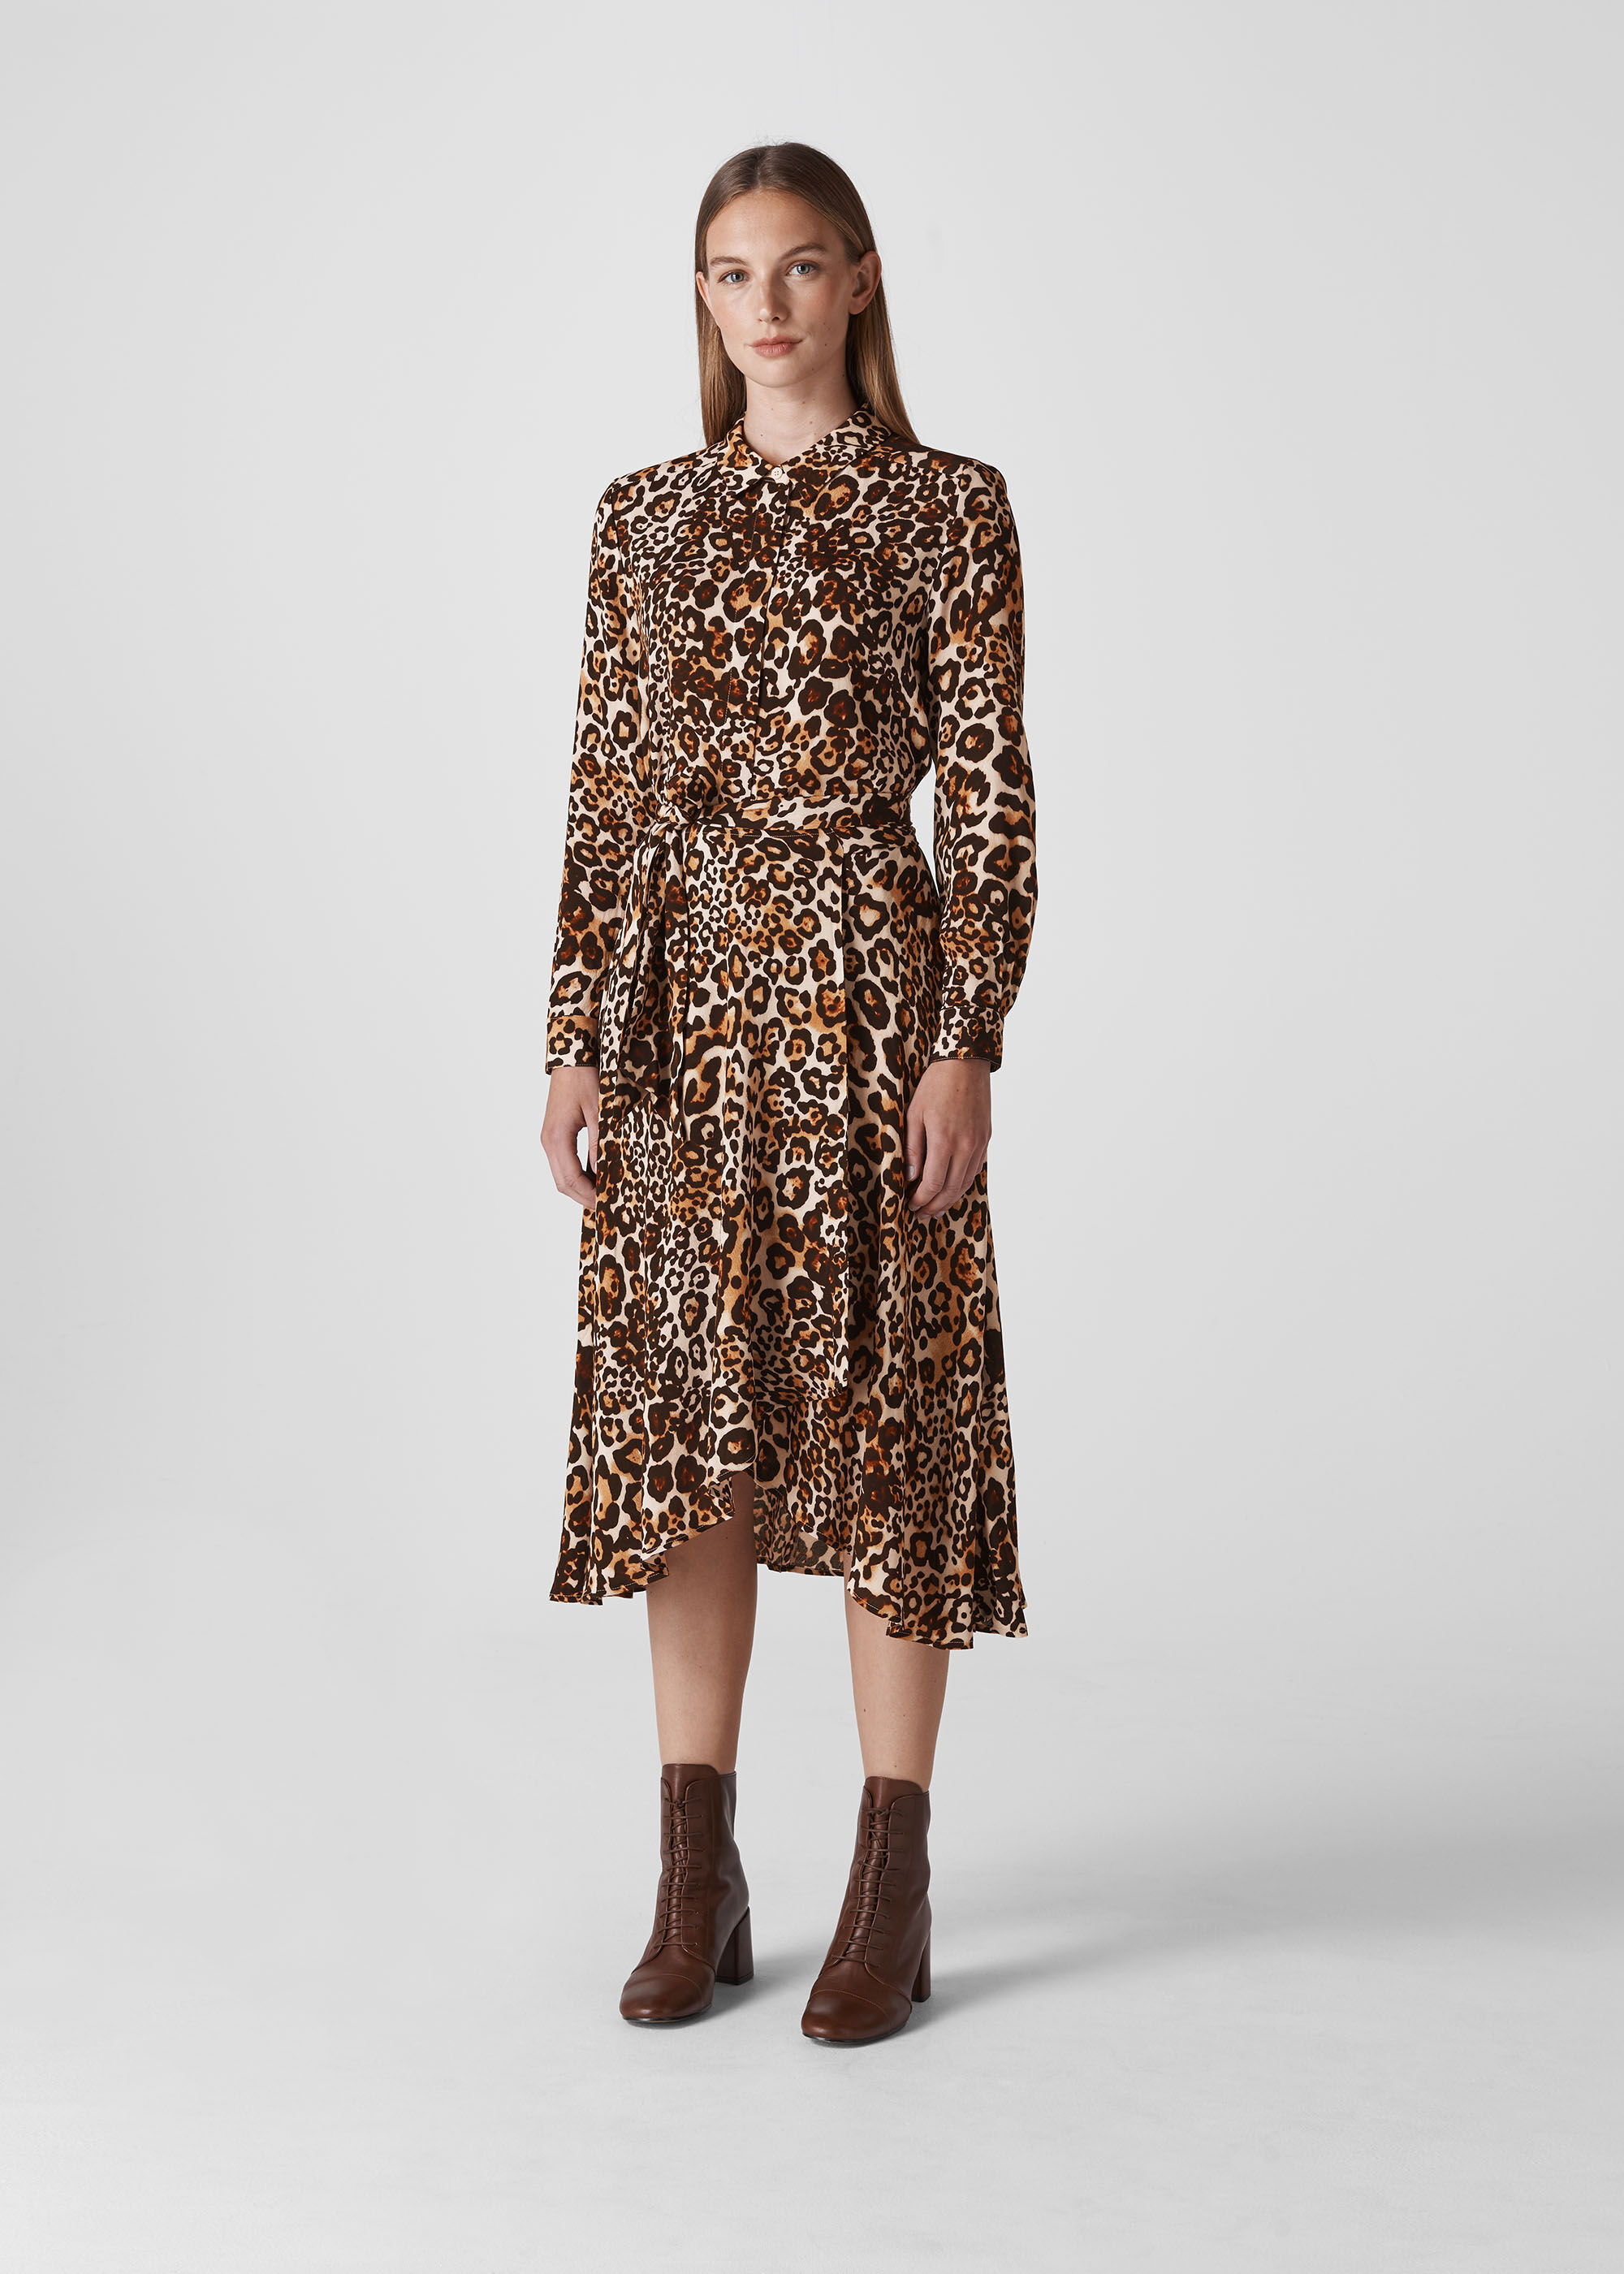 Leopard Print Animal Print Esme Dress | WHISTLES | Whistles